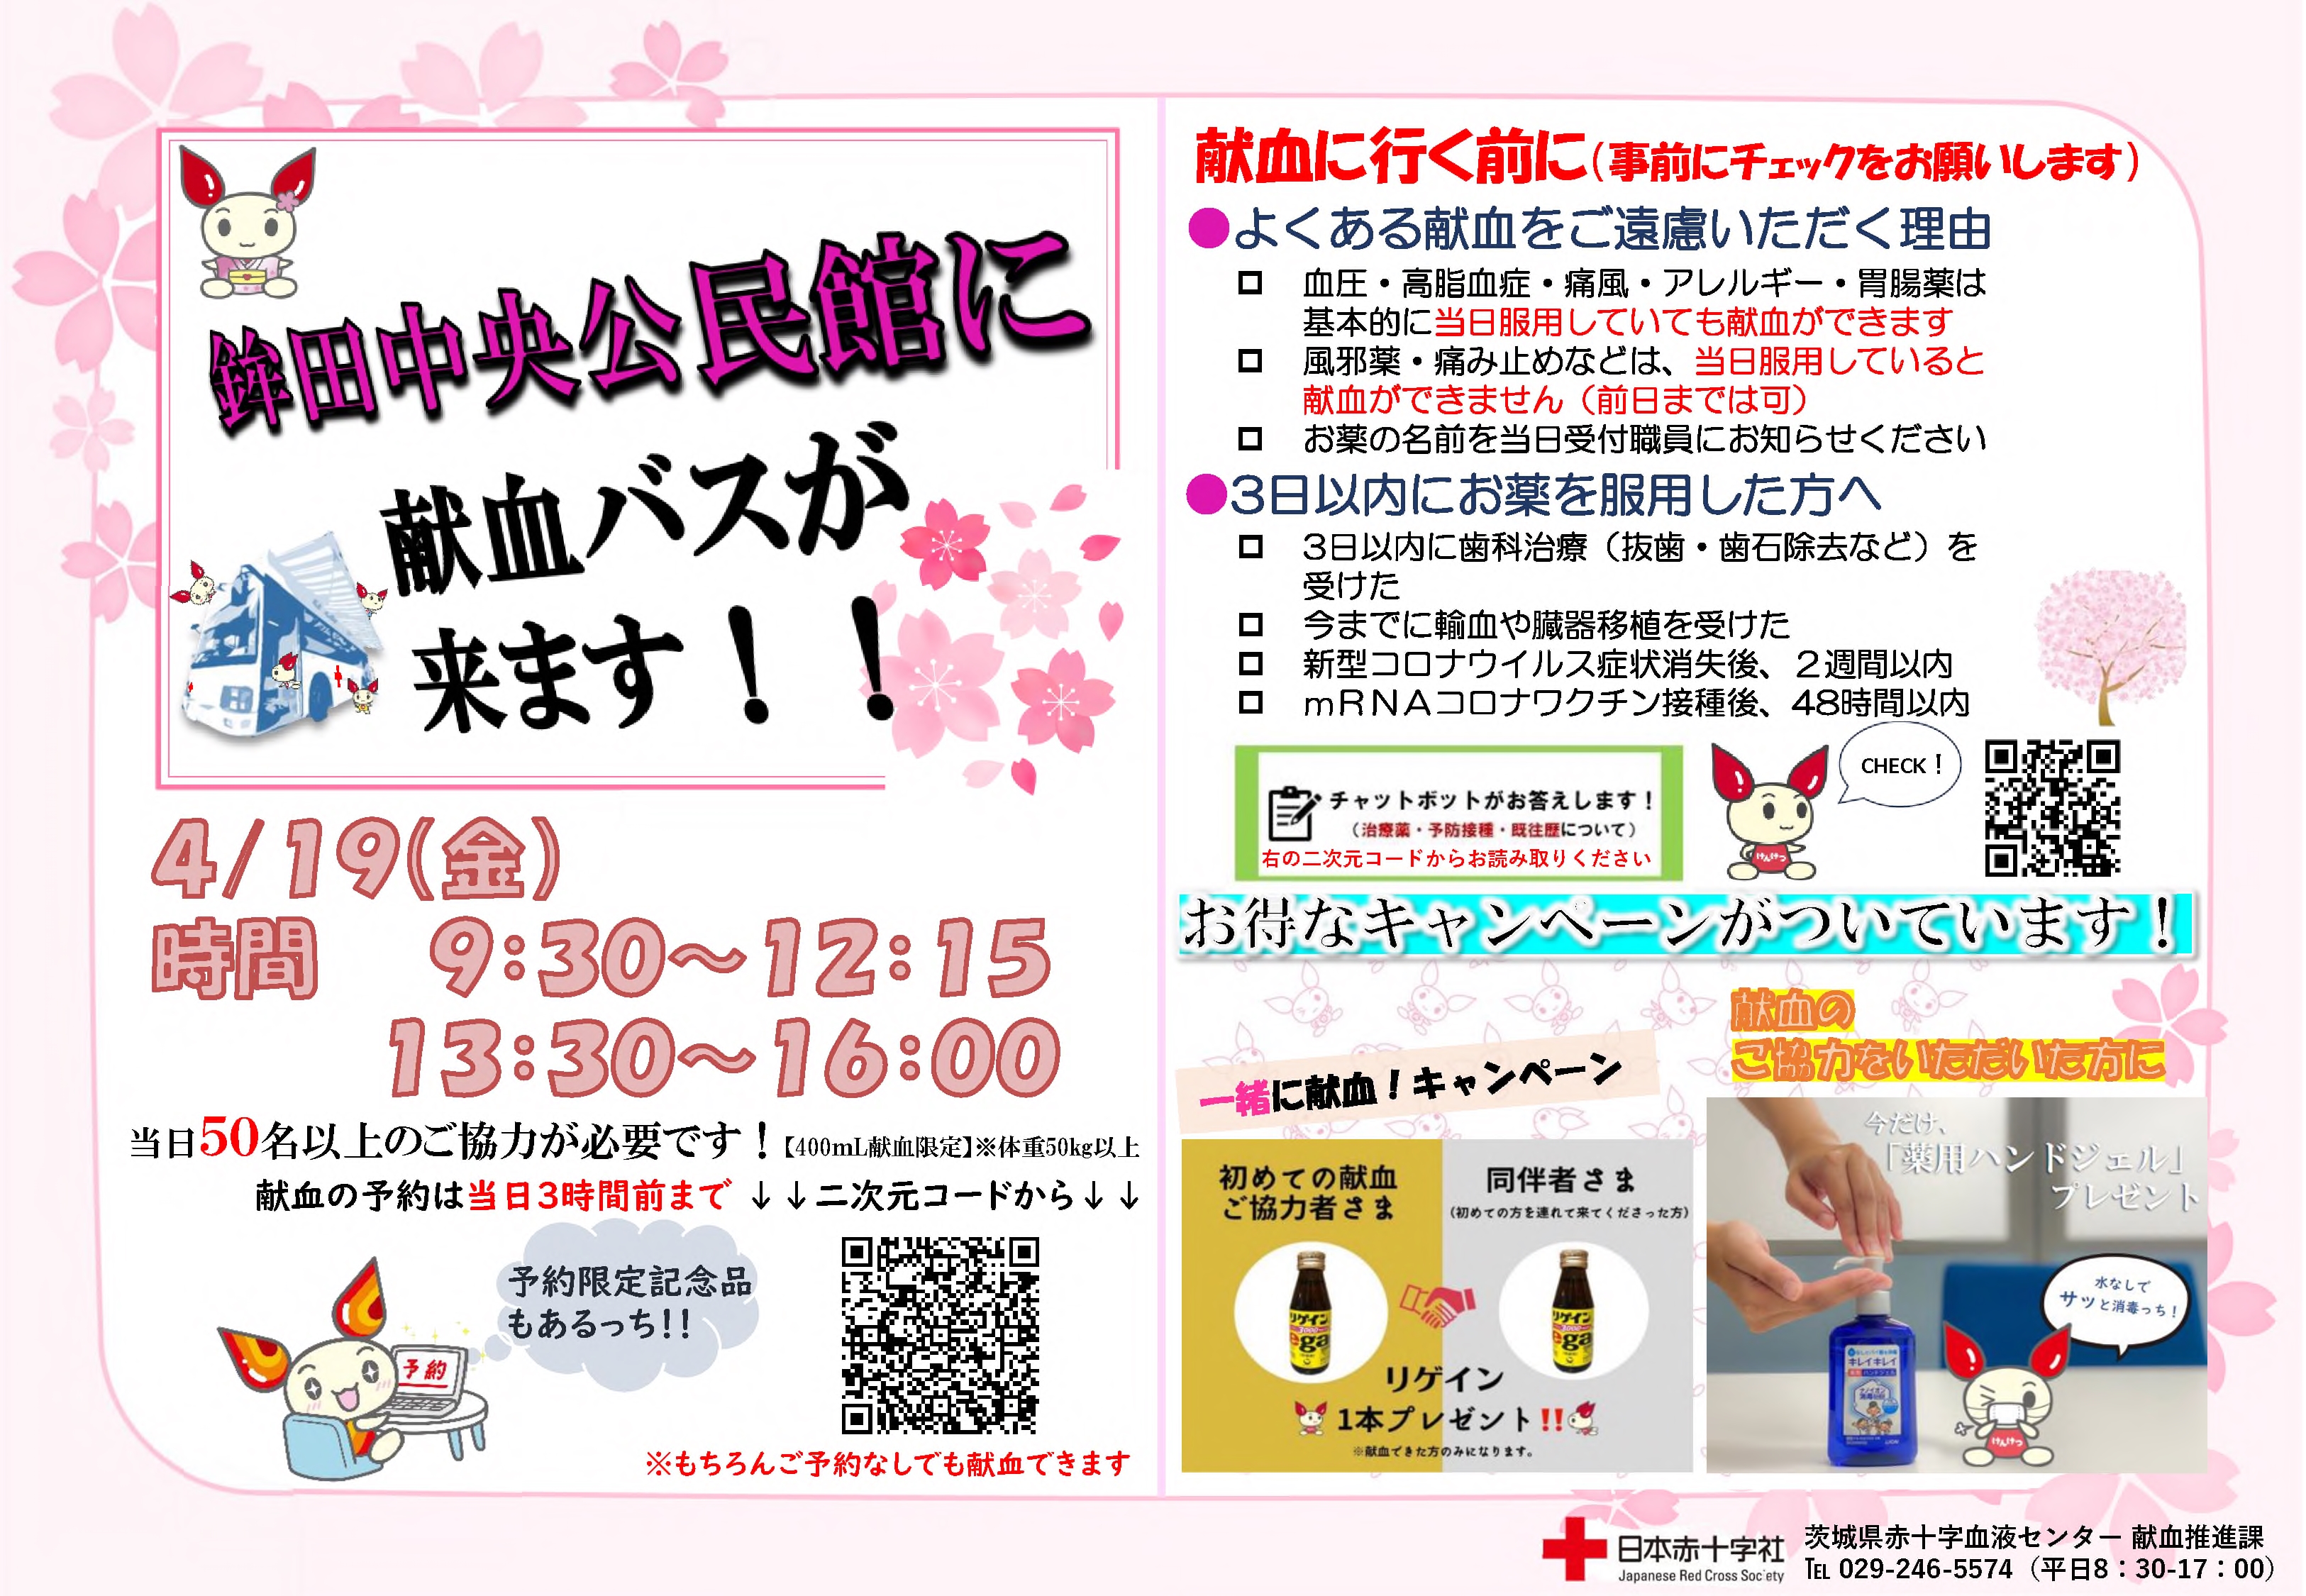 4.19鉾田中央公民館 献血チラシ